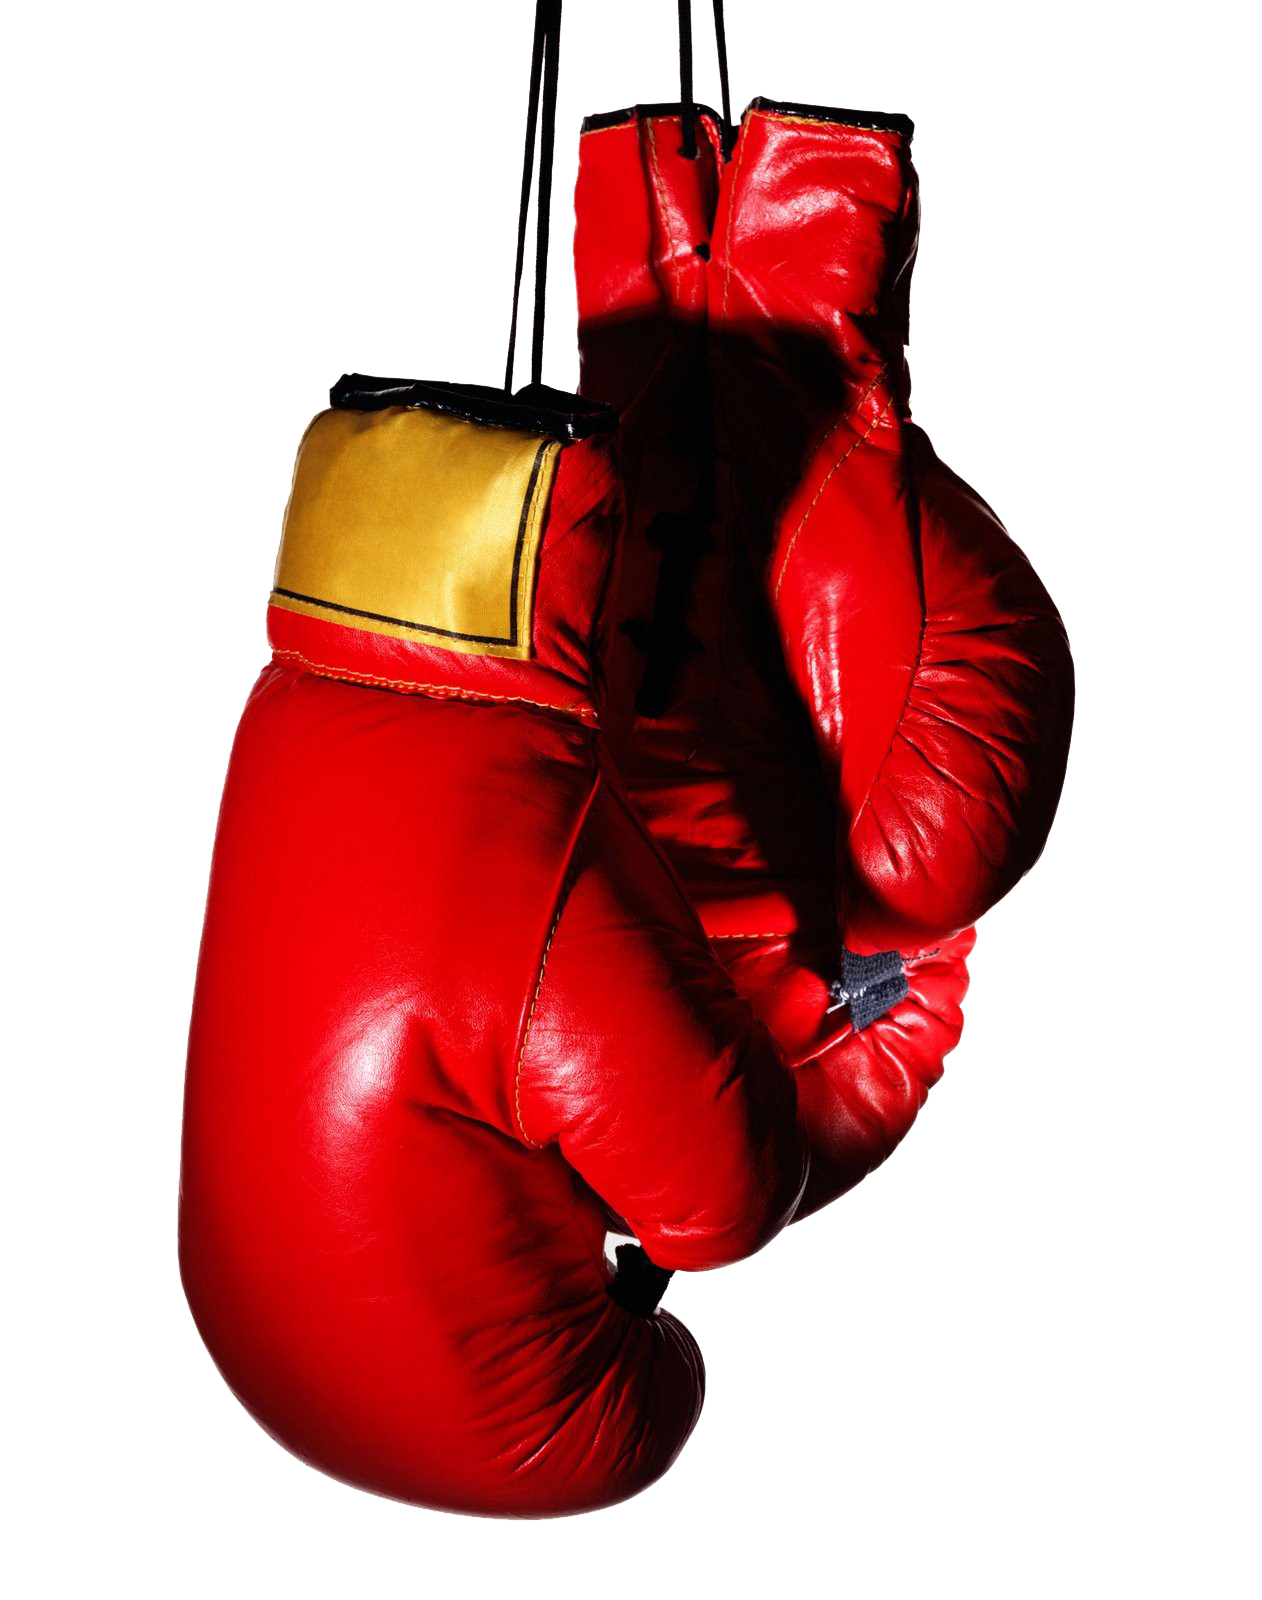 Boxing Gloves Transparent Image PNG Image